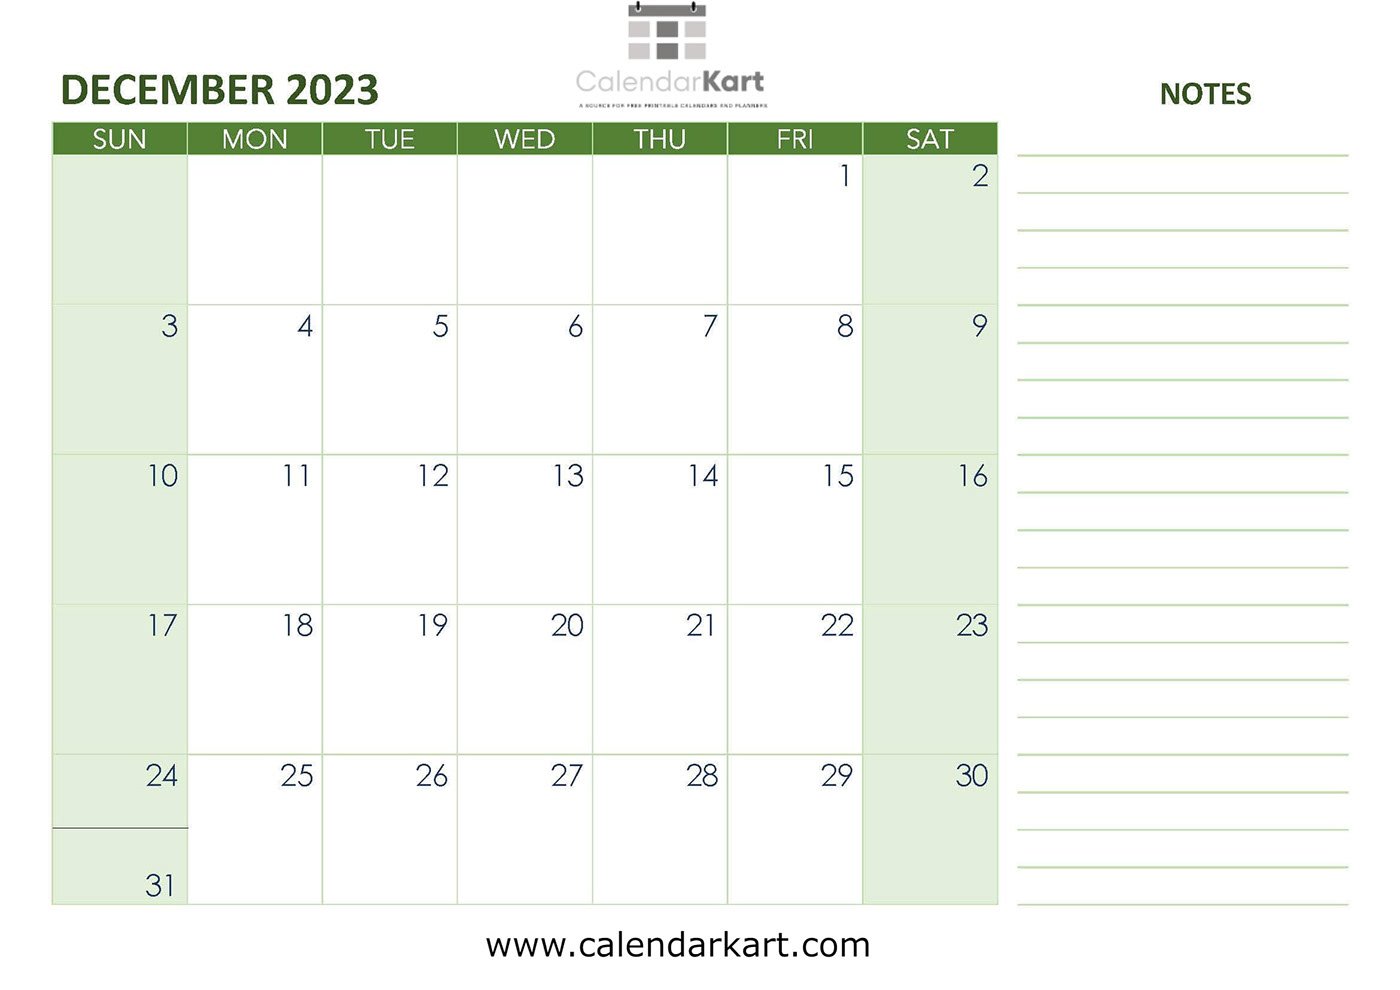 December December 2023 Calendars Free calendars